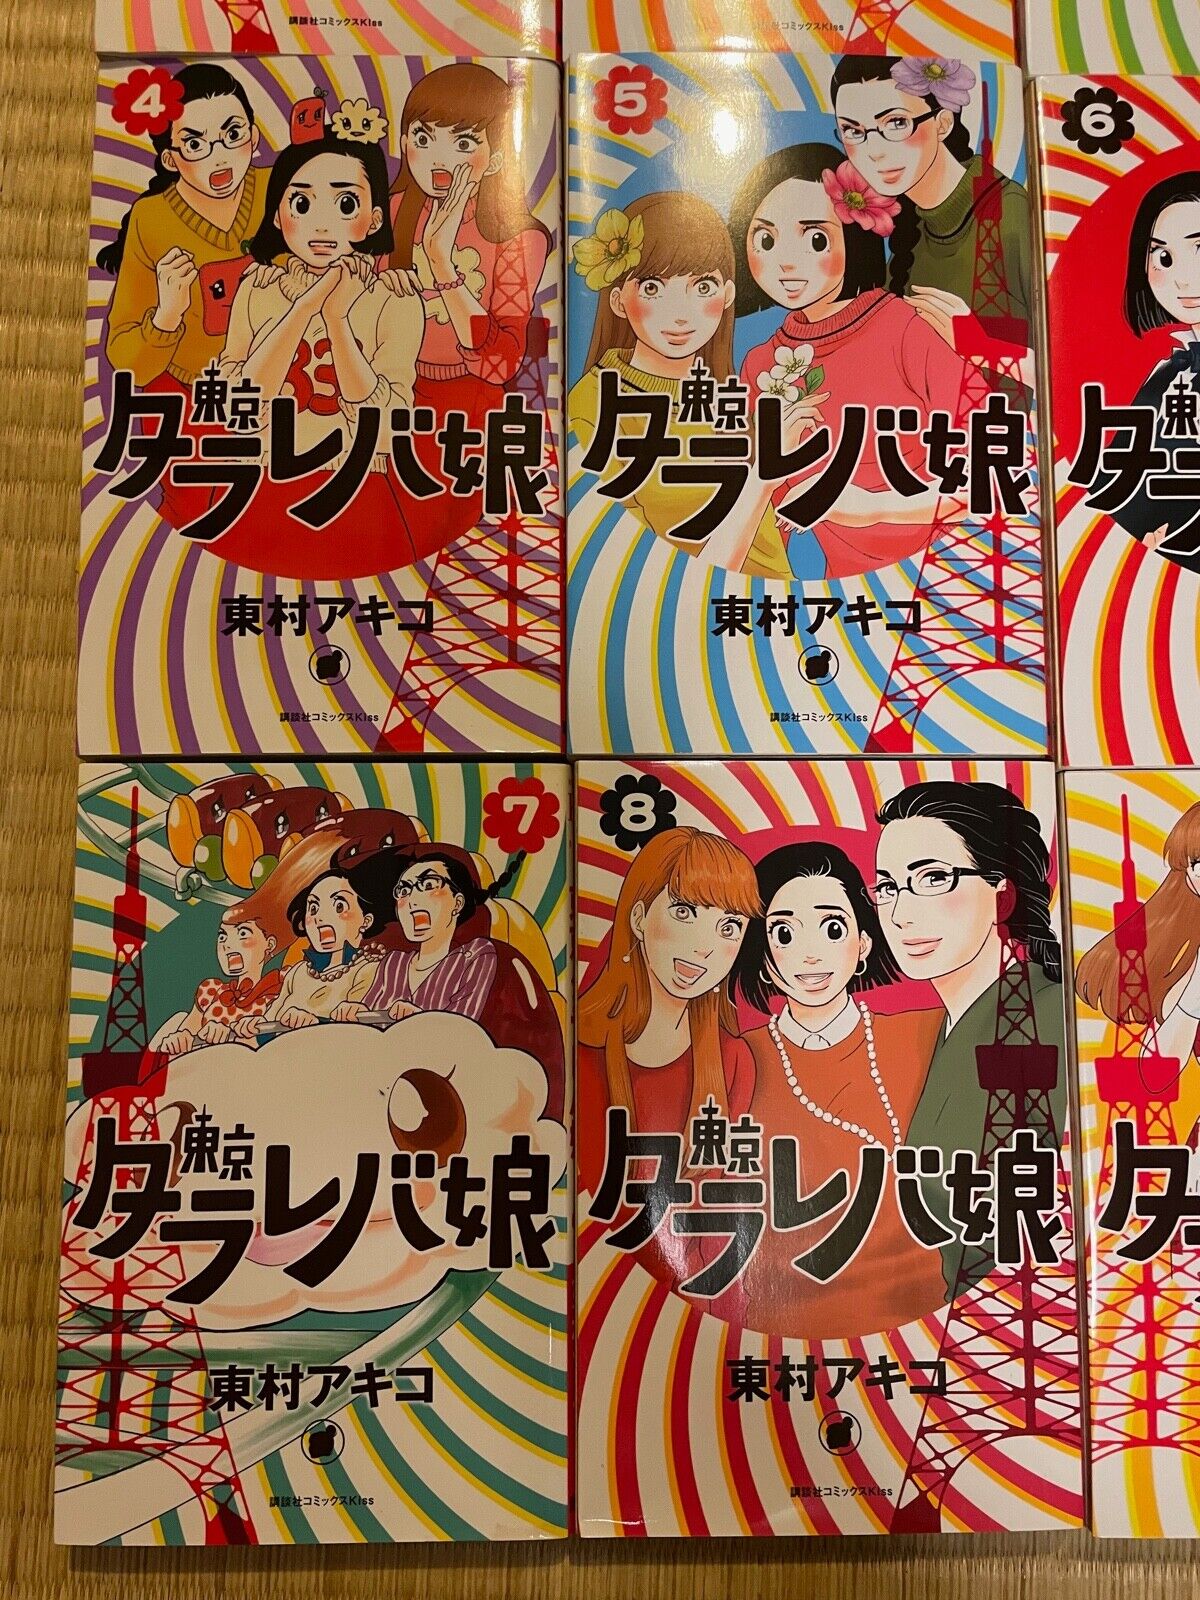 Tokyo Tarareba Girls: Manga Complete set Vol.1-9 Japanese Ver. F/S